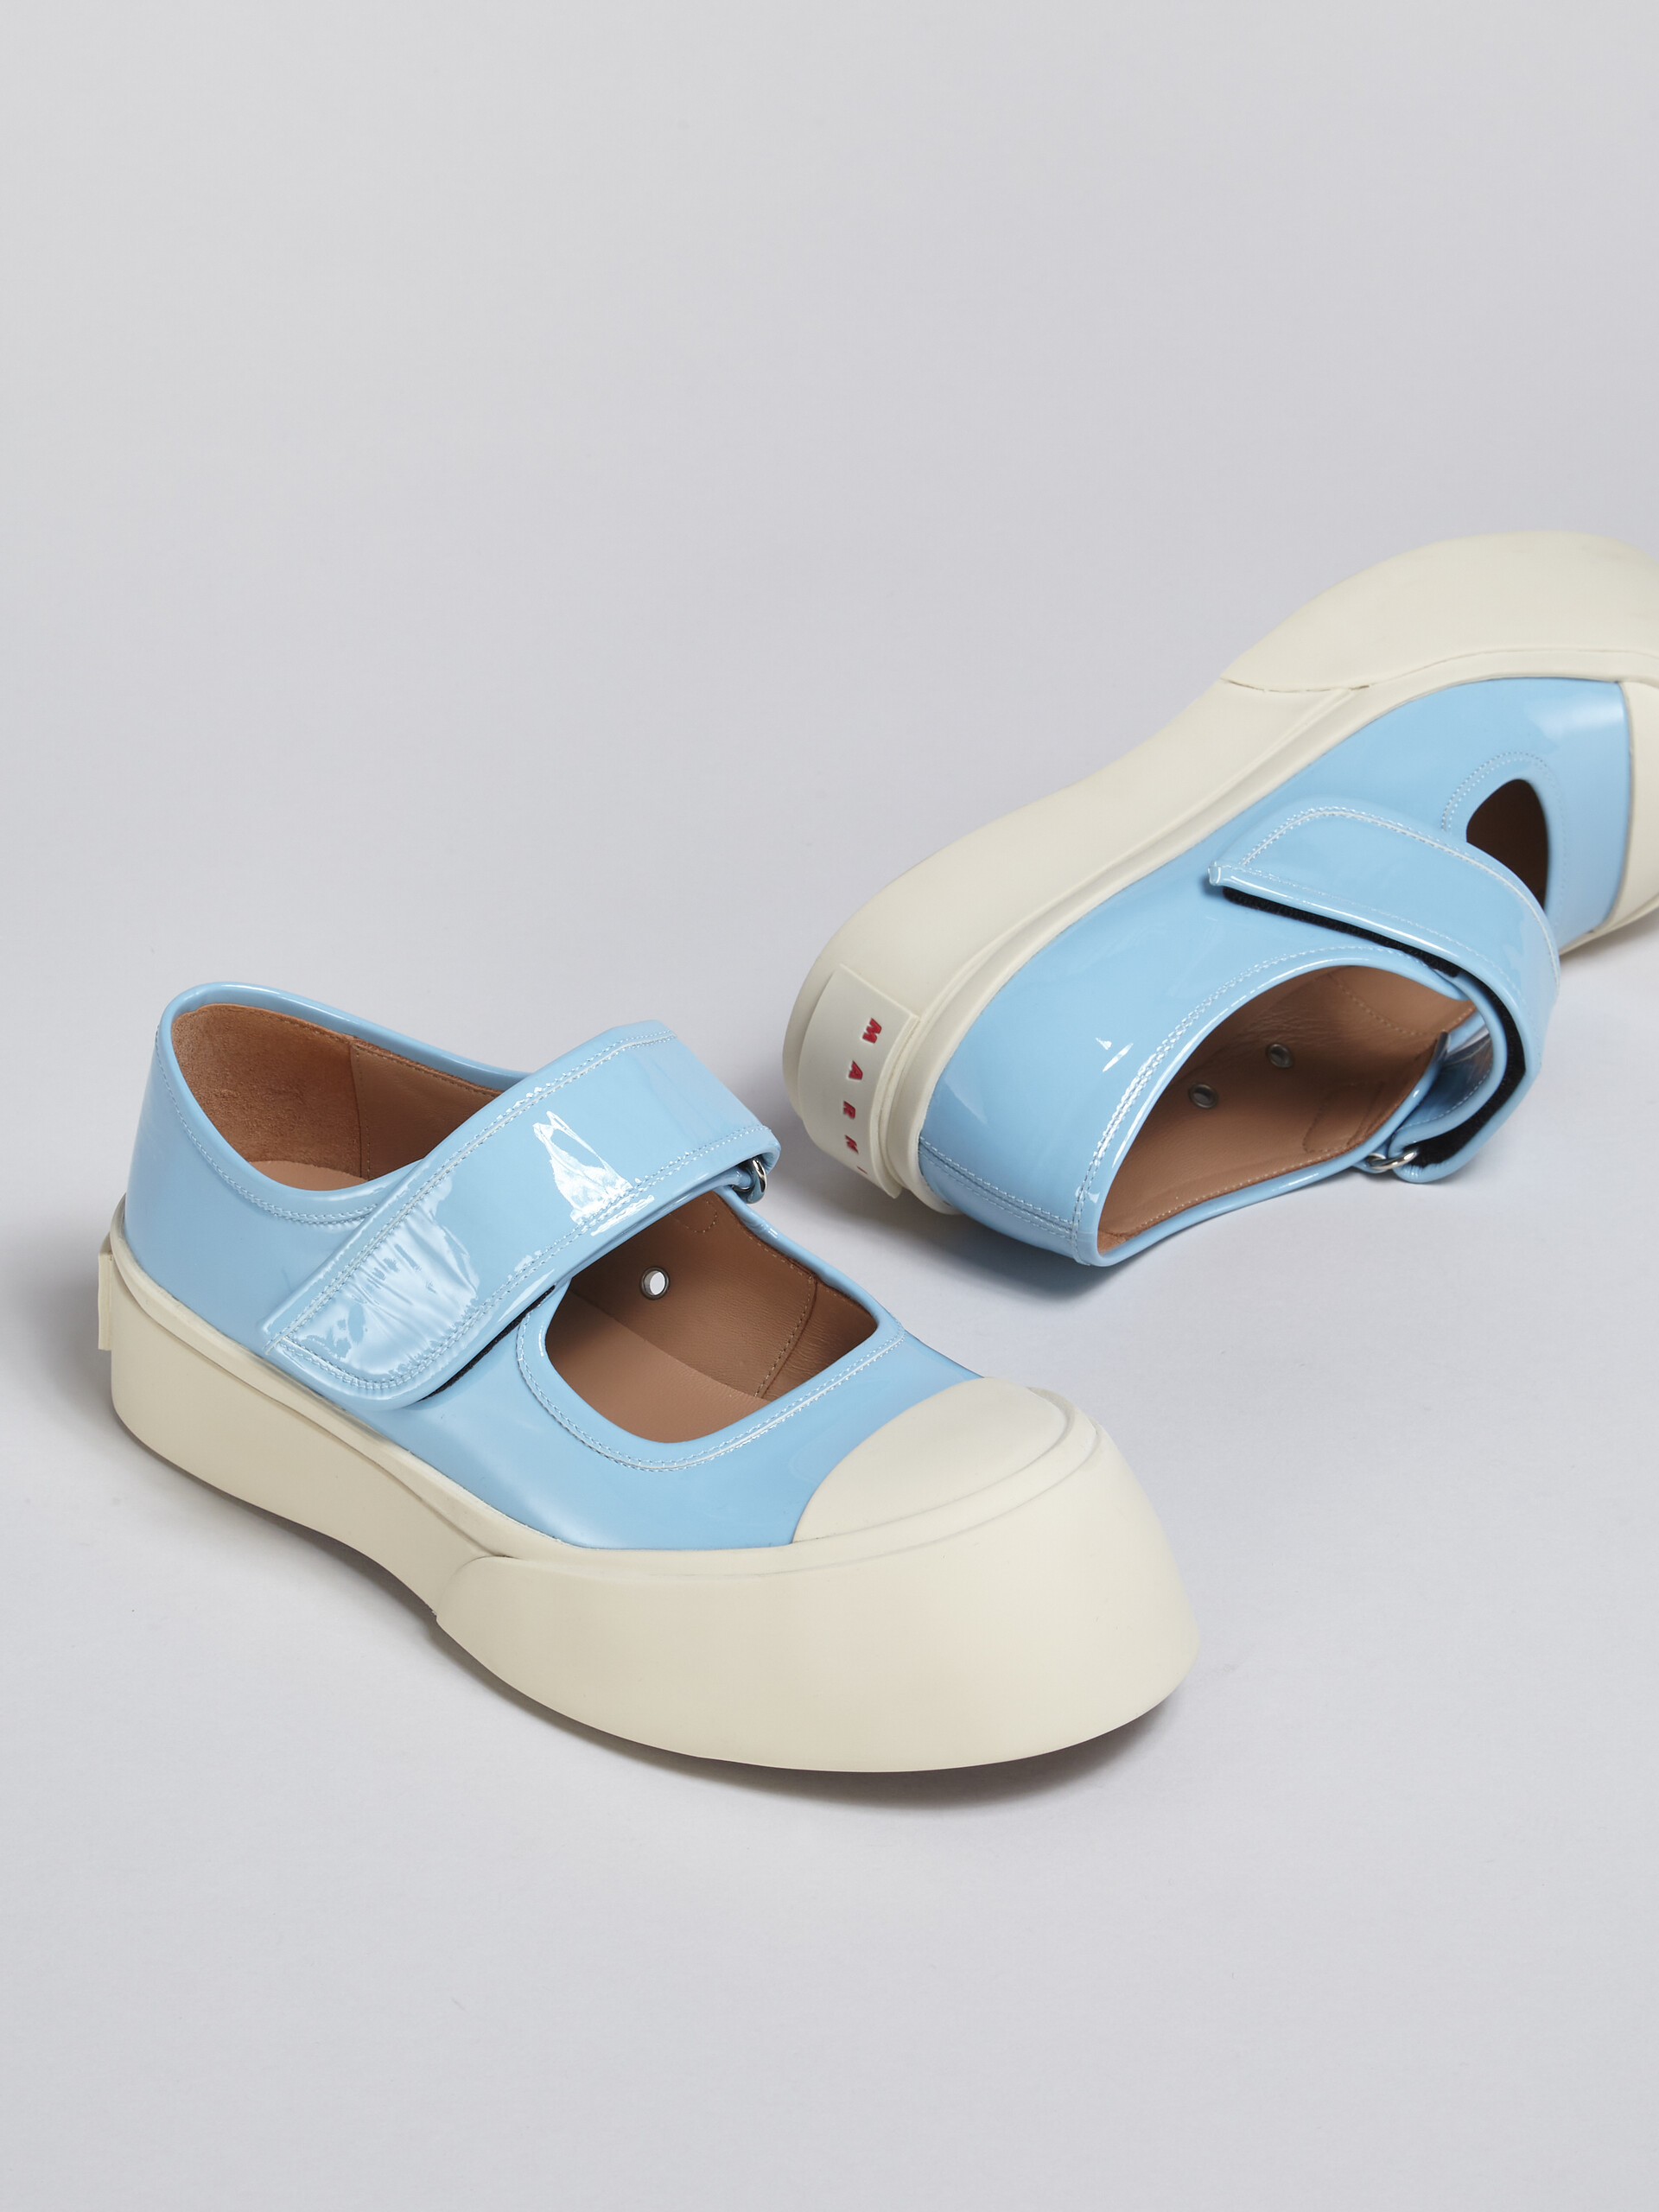 Mary-Jane-Sneaker PABLO aus weichem Lackleder - Sneakers - Image 5